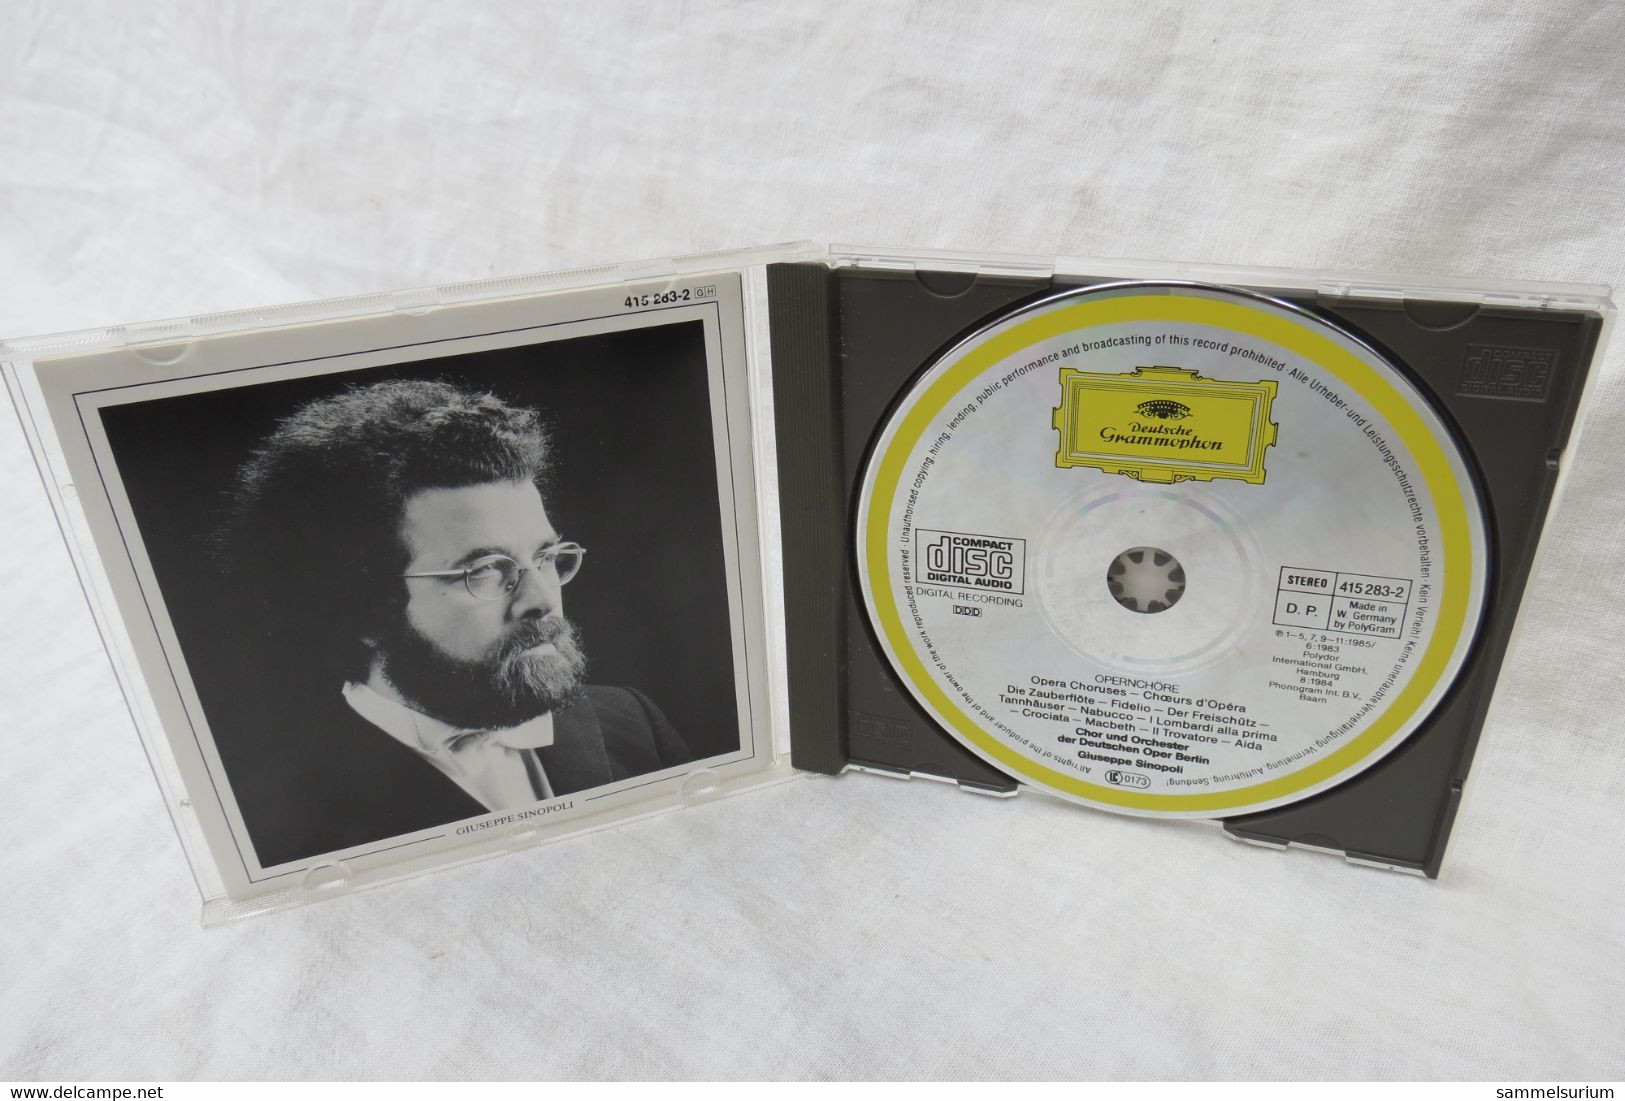 CD "Opern-Chöre" Mozart, Weber, Beethoven Giuseppe Sinopoli, Deutsche Grammophon - Opera